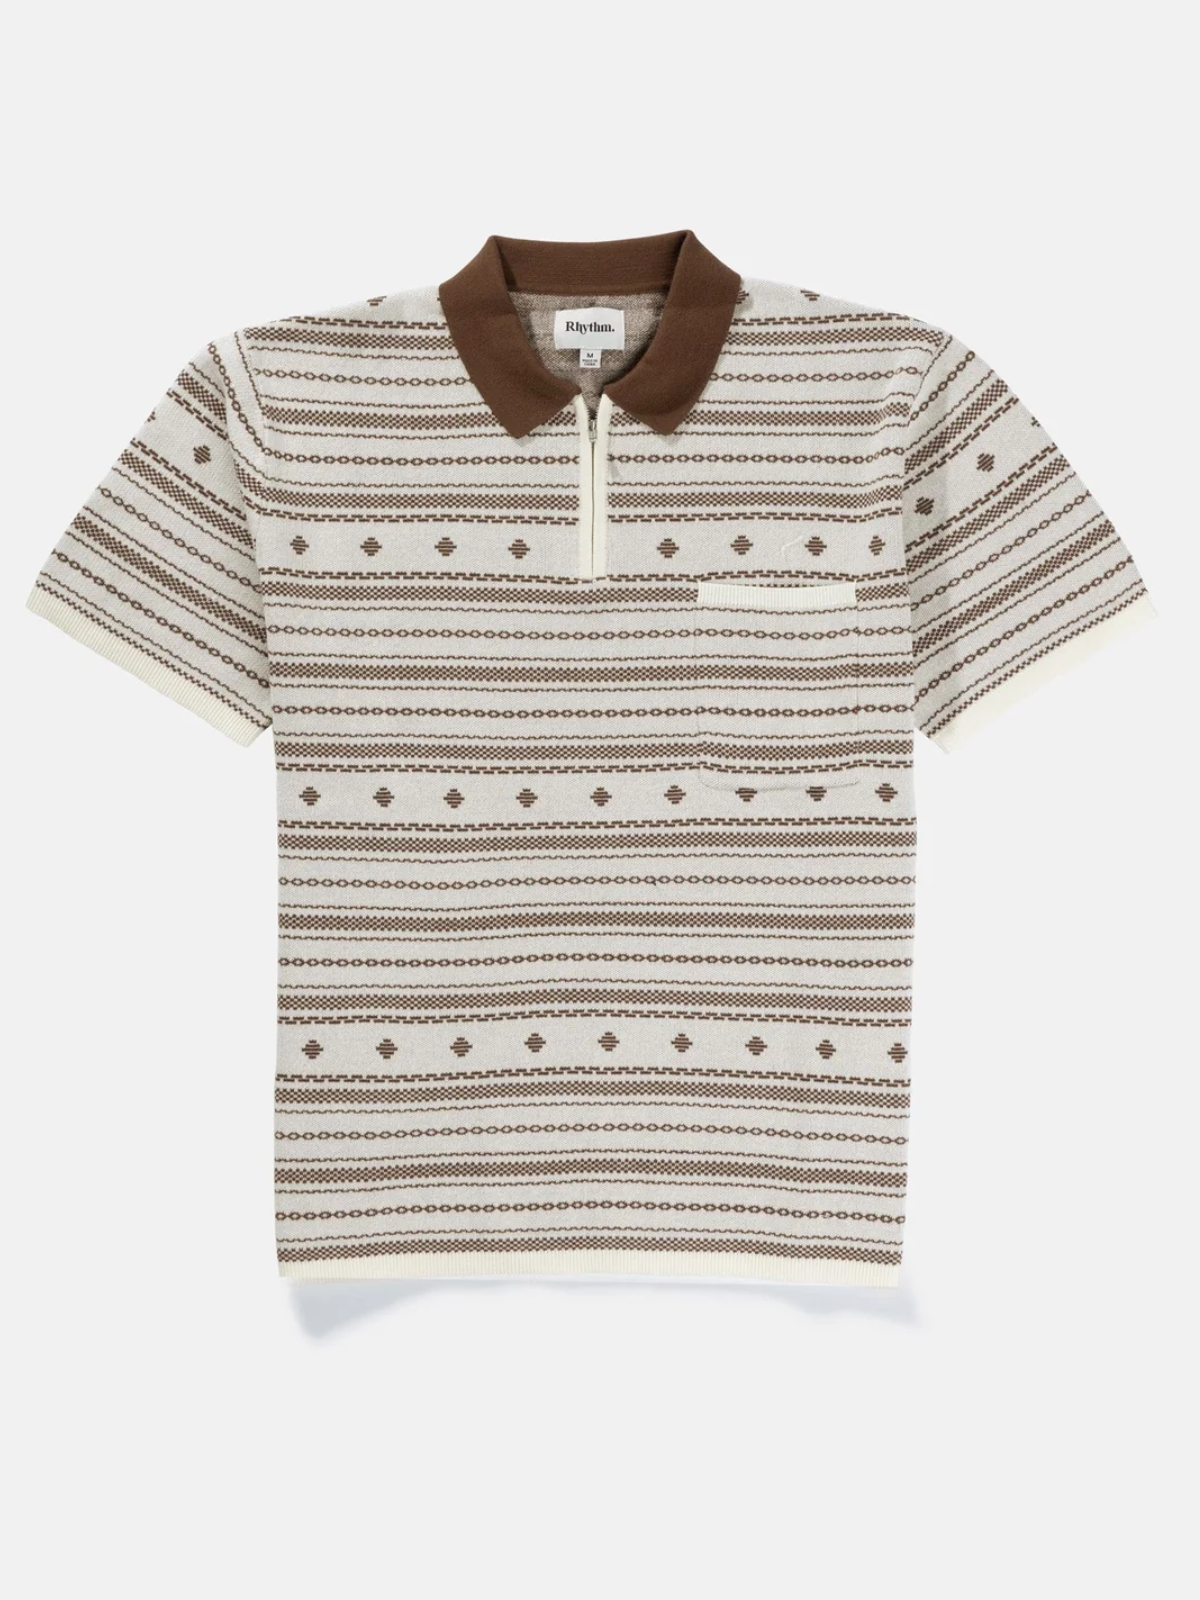 rhythm jacquard ss short sleeve knit sweater polo natural cream brown tan geometric pattern kempt athens ga georgia men's clothing store